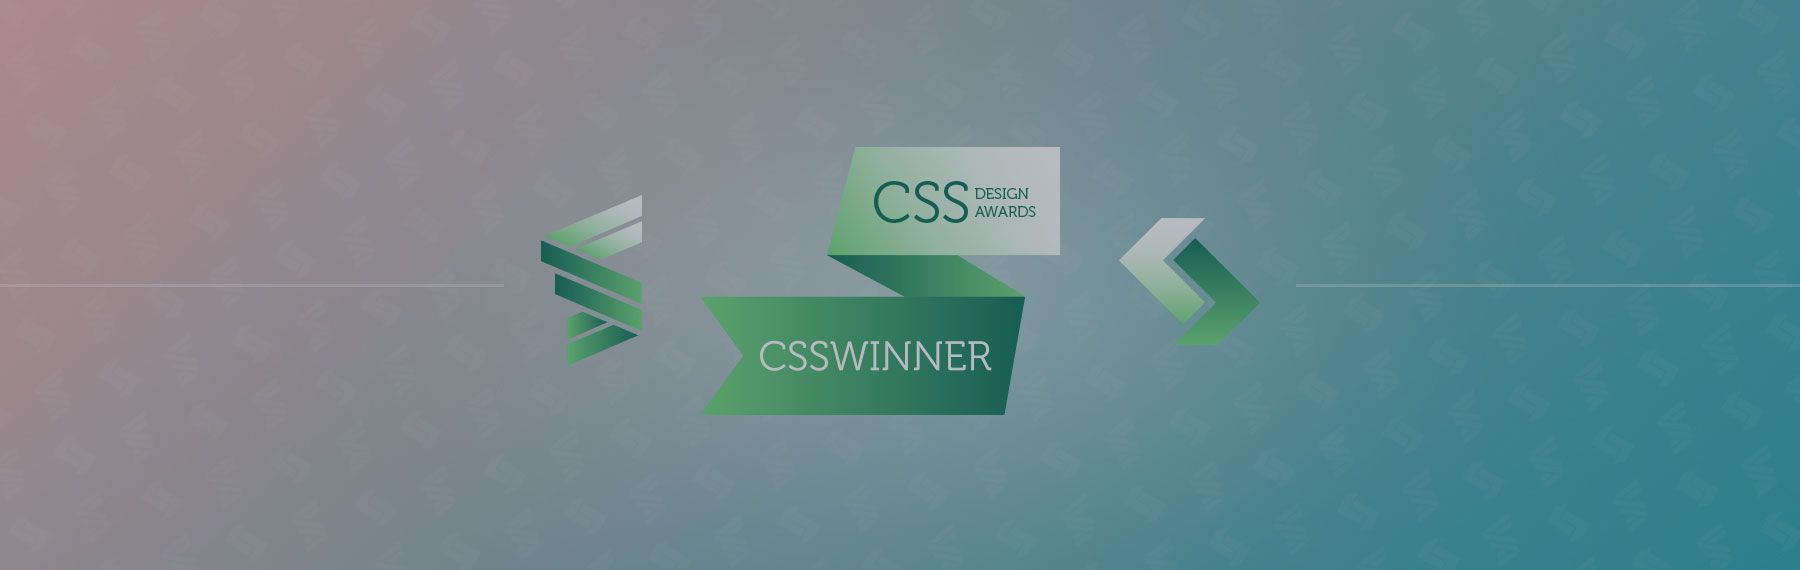 We've received CSS Design Awards and CSSWinner SOTW awards!